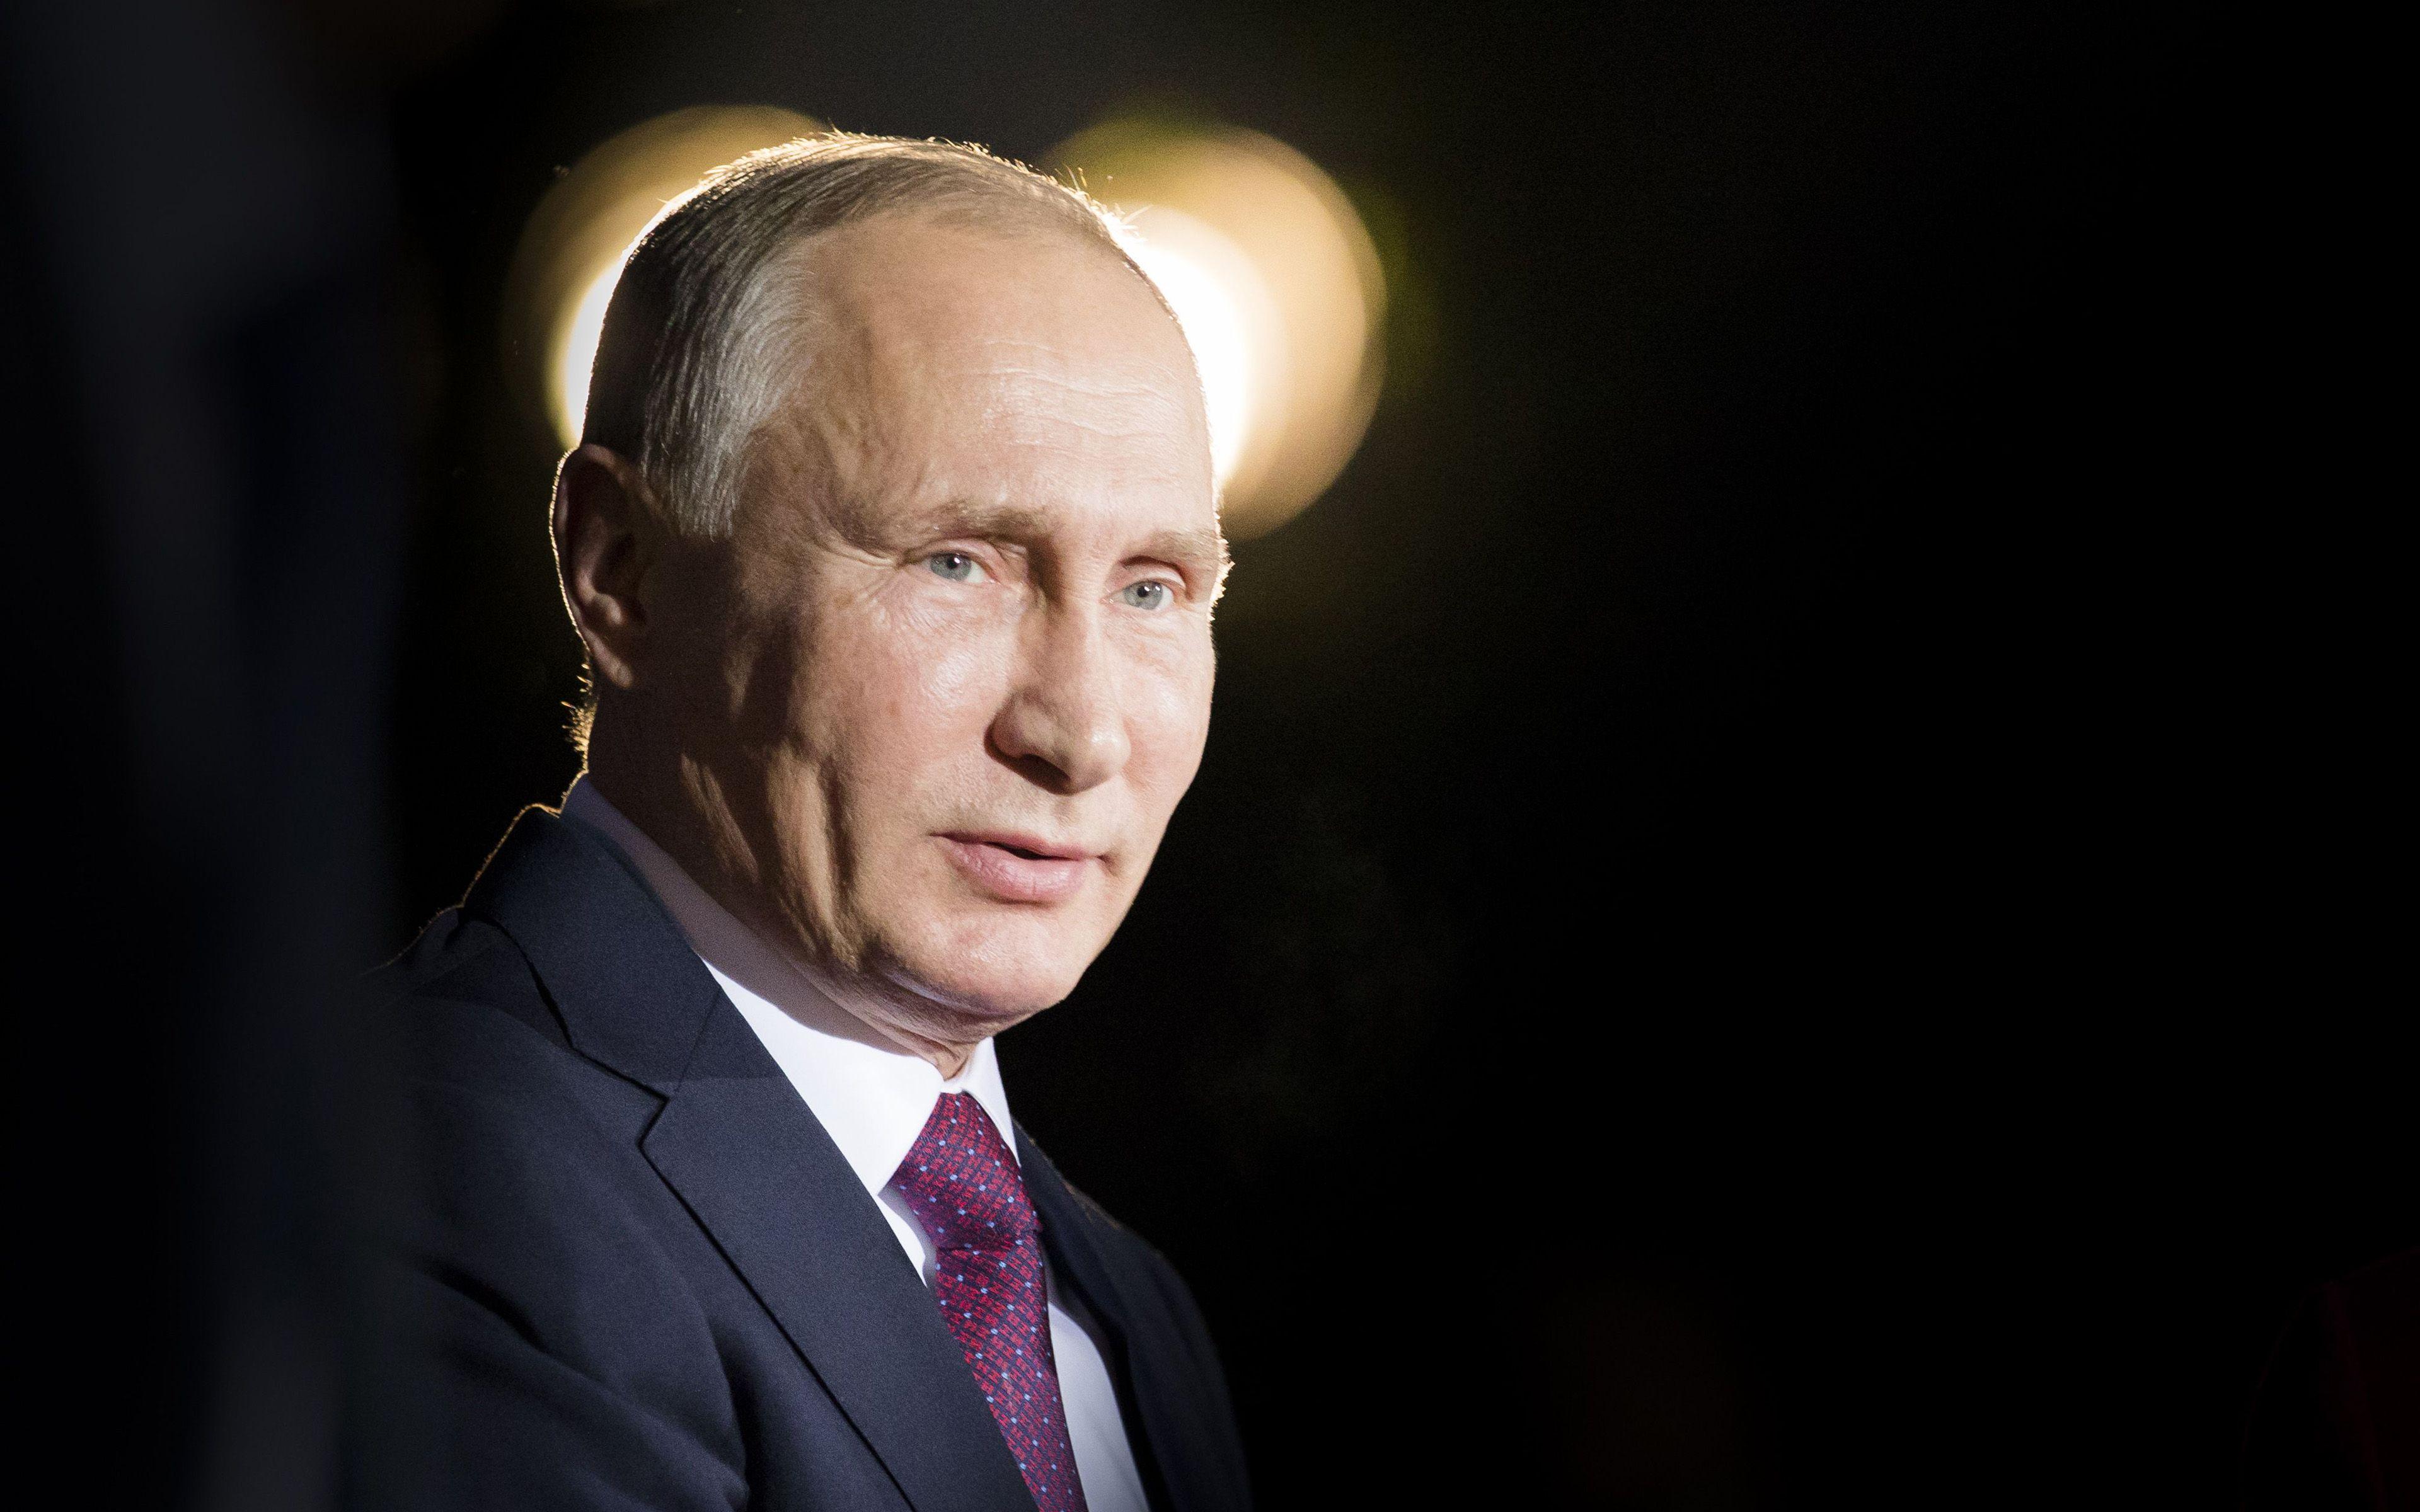 Download wallpaper Vladimir Putin, portrait, 4k, president